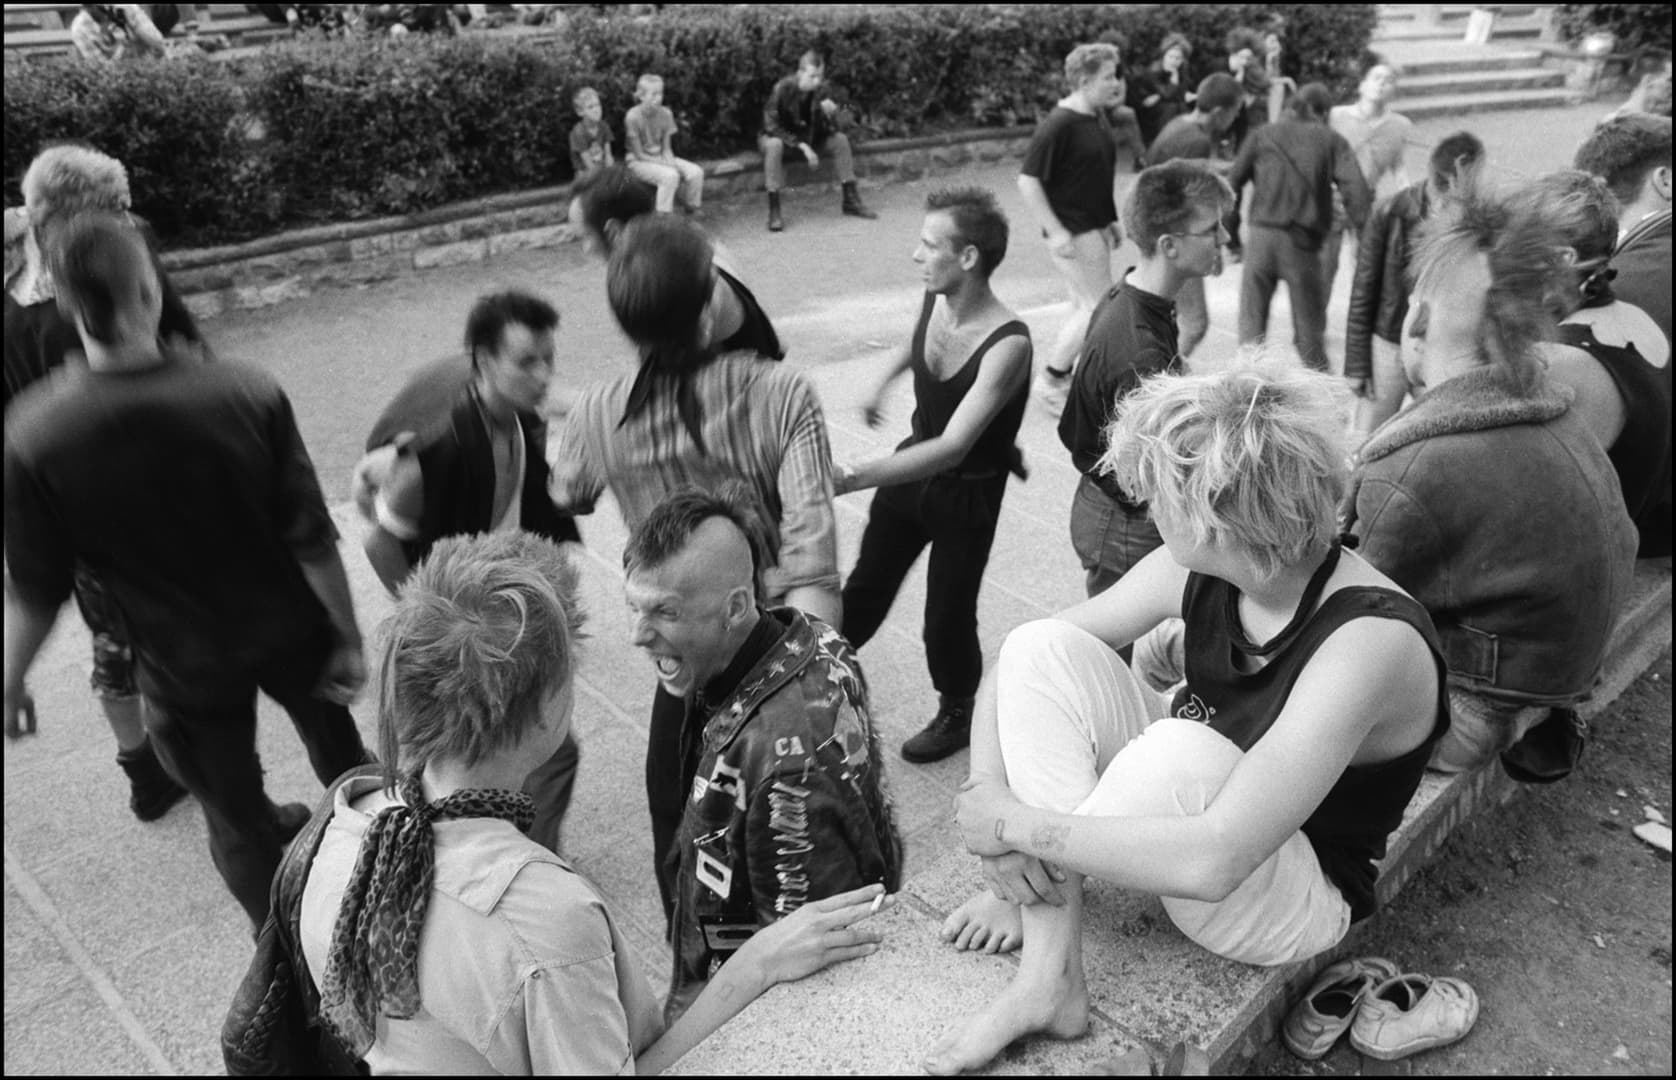 Rock concert at the open-air theatre, Berlin-Weissensee, 1990